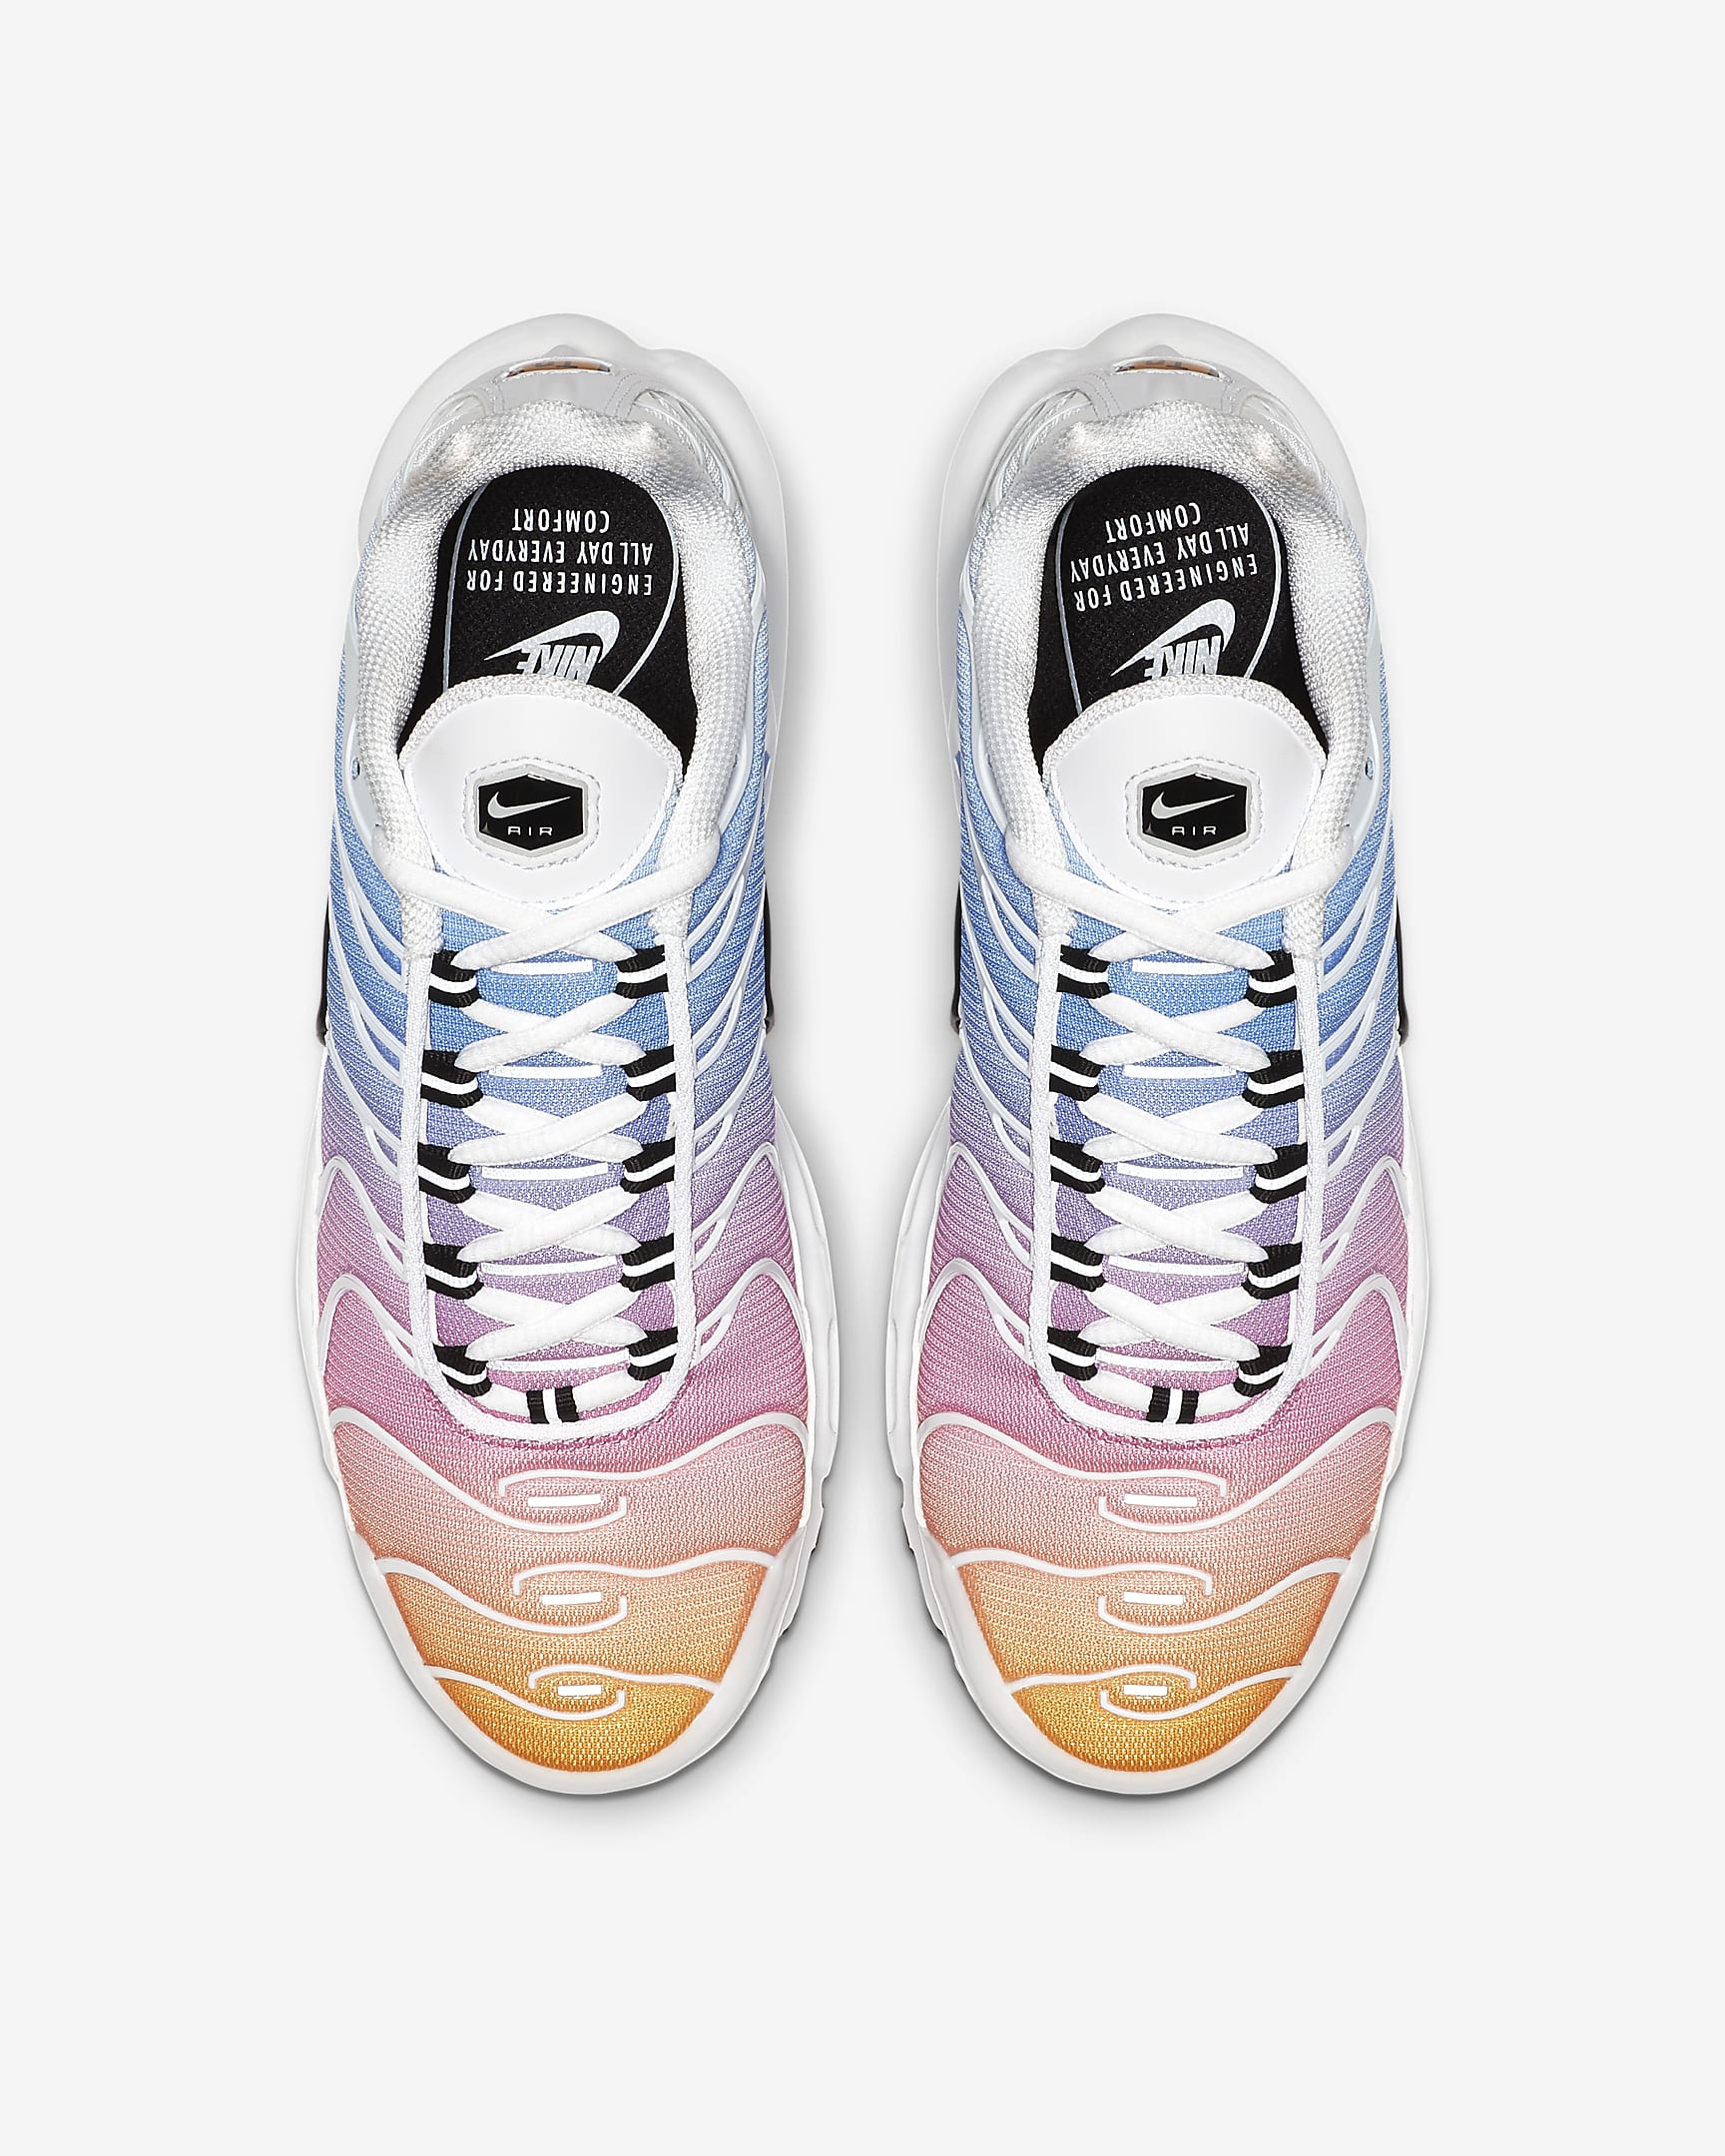 Chaussure Nike Air Max Plus - Blanc/University Blue/Psychic Pink/Noir